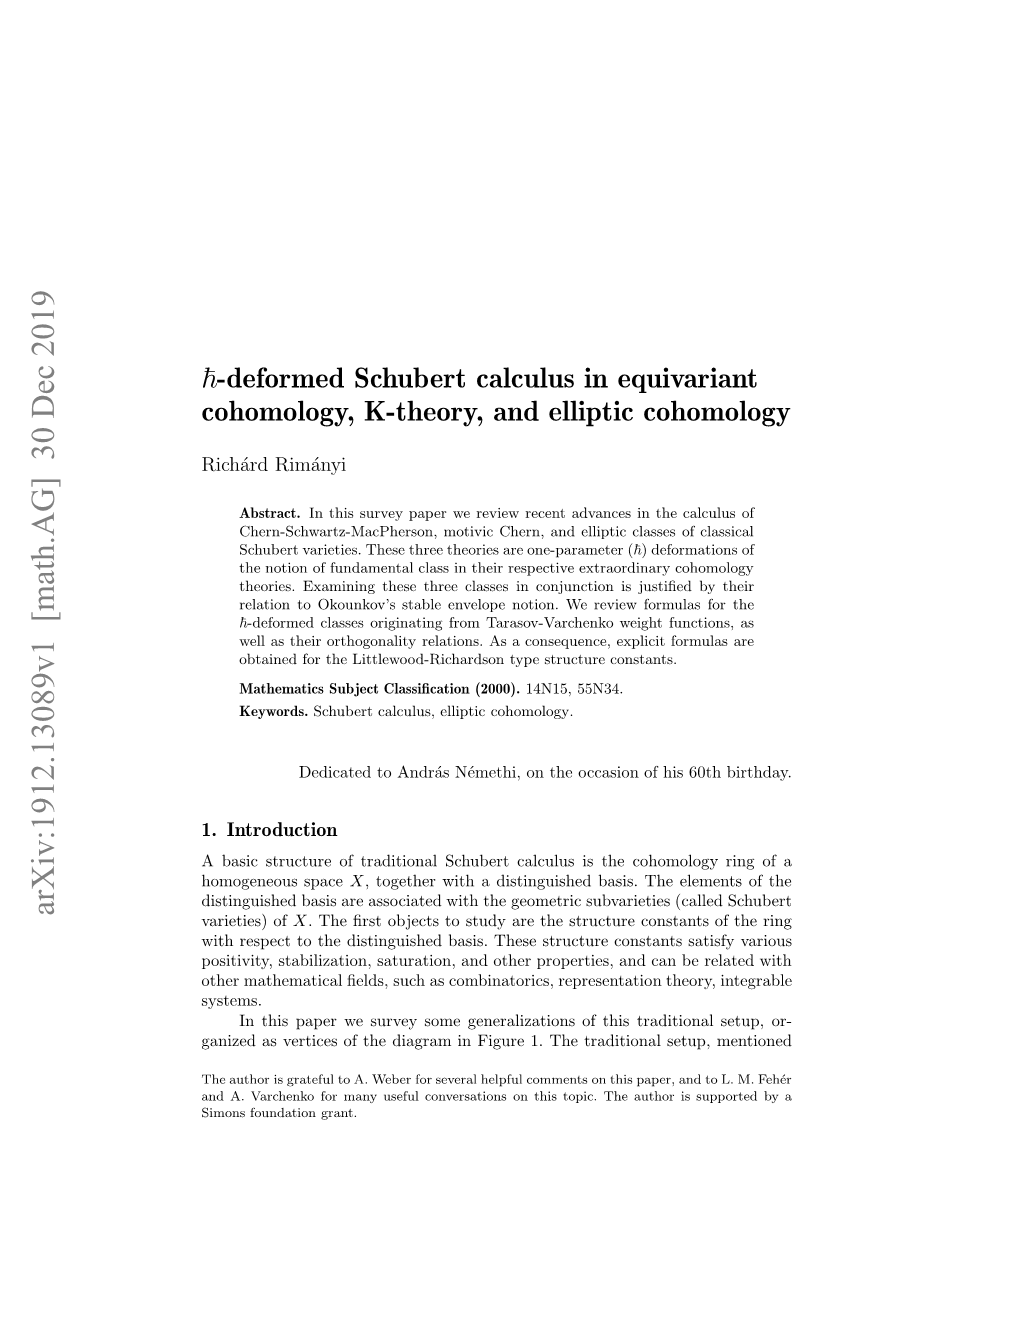 $\Hbar $-Deformed Schubert Calculus in Equivariant Cohomology, K